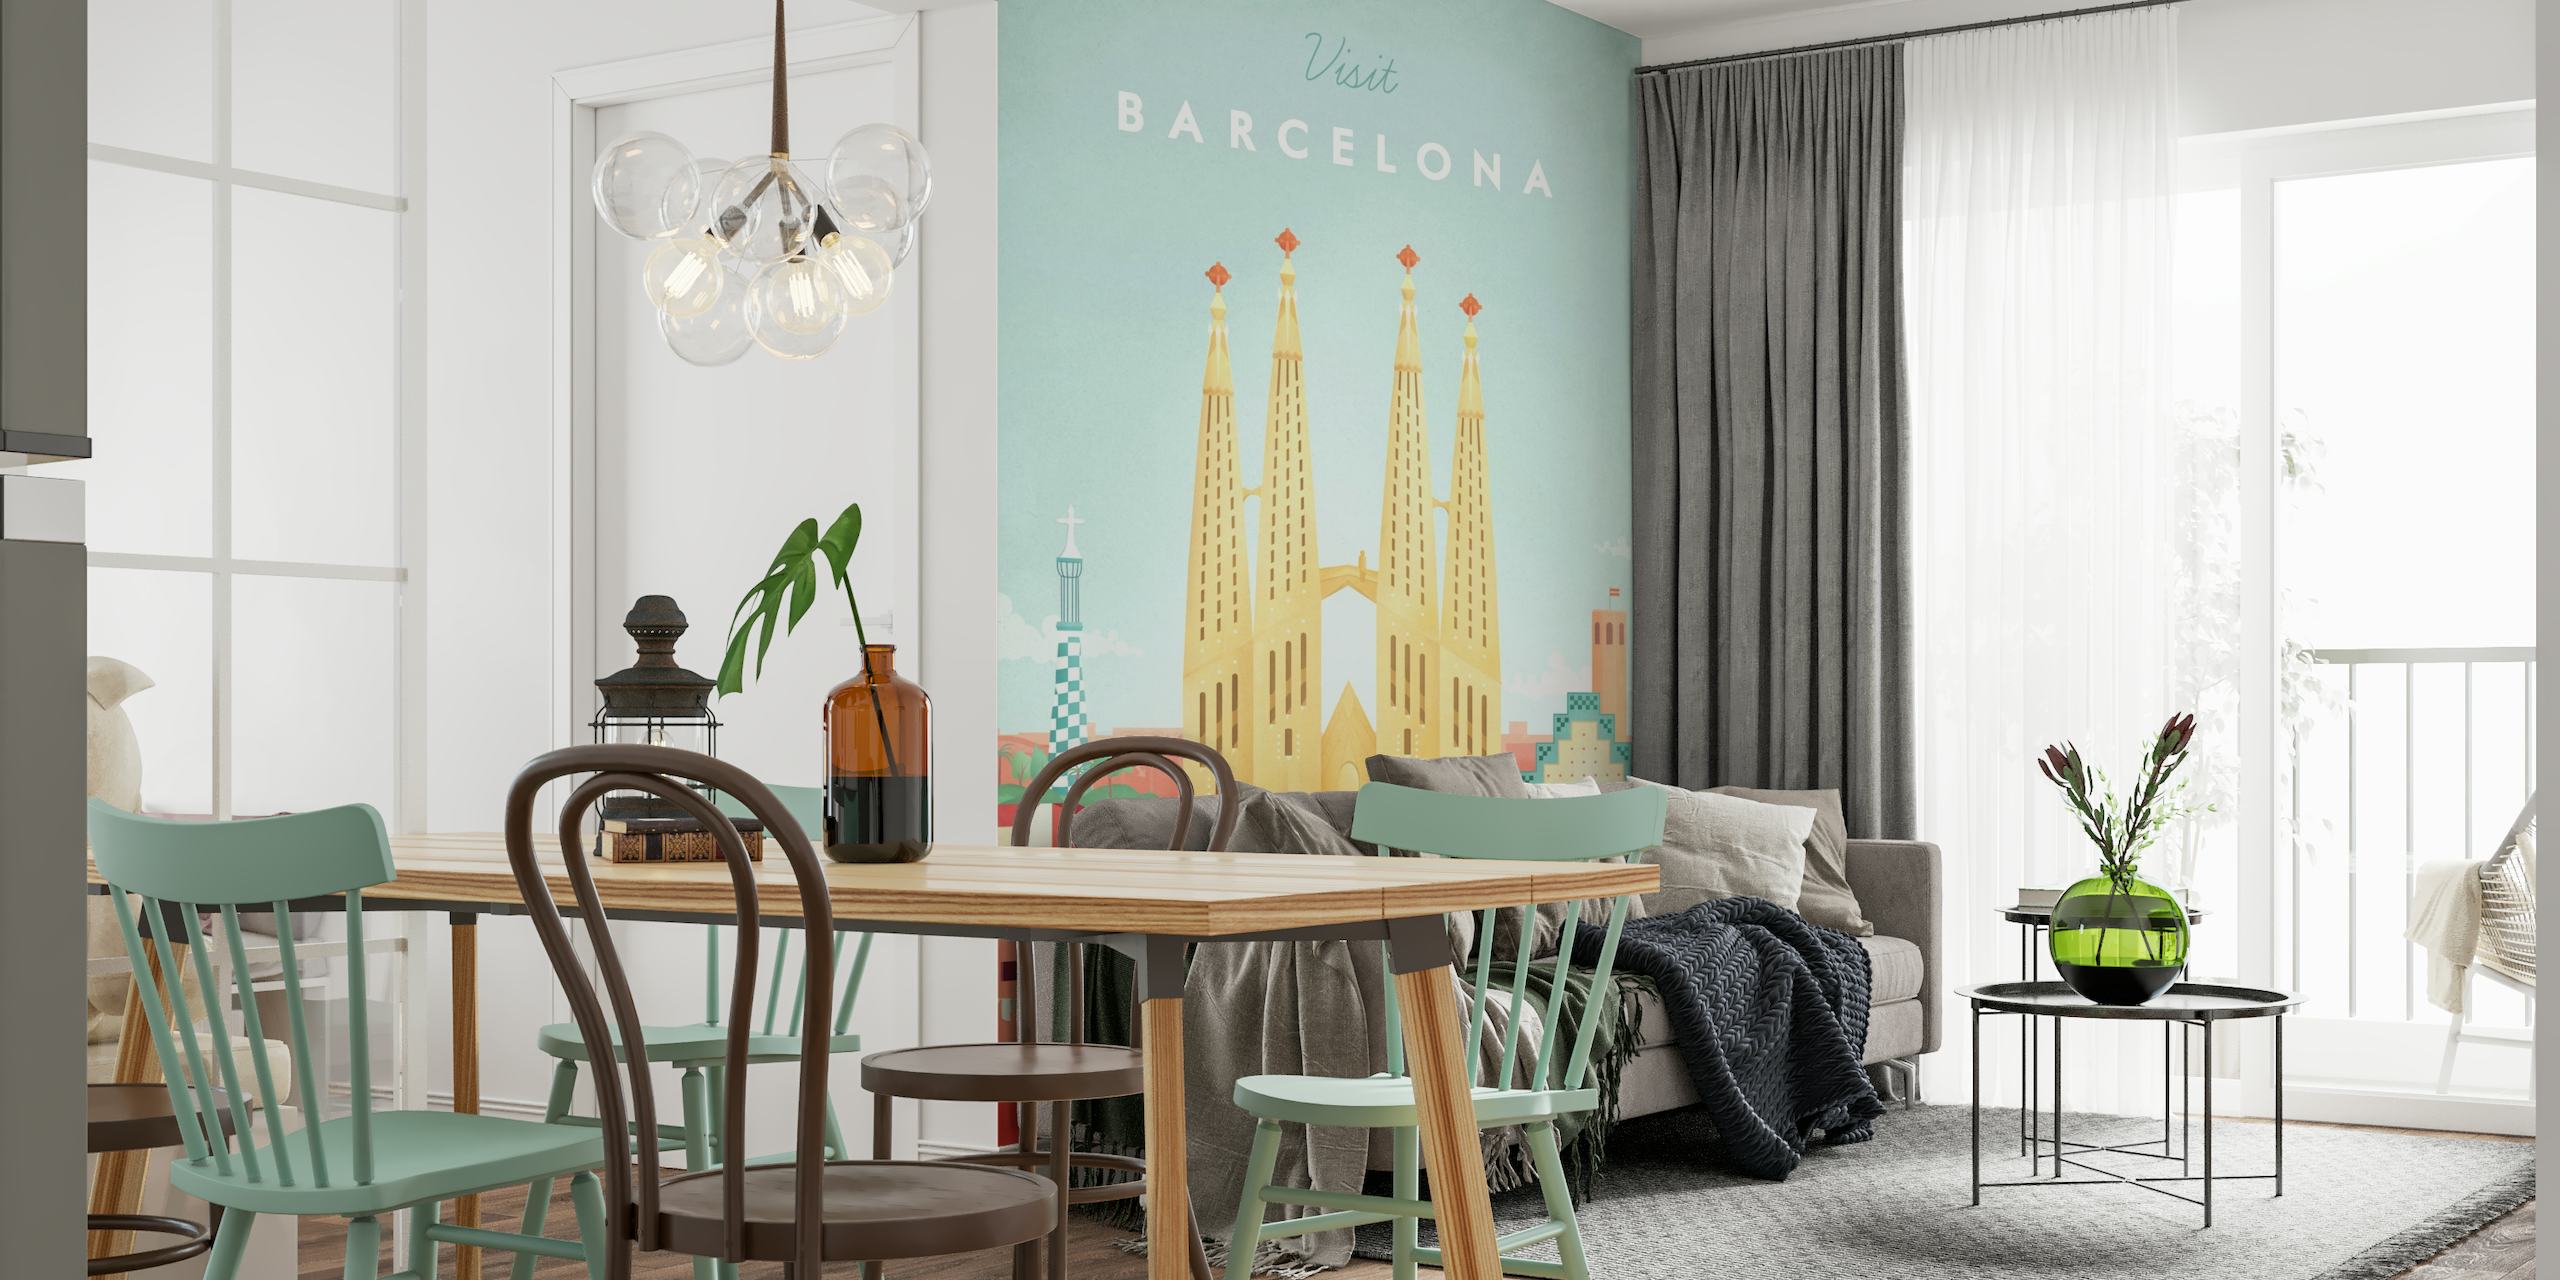 Barcelona Travel Poster papiers peint